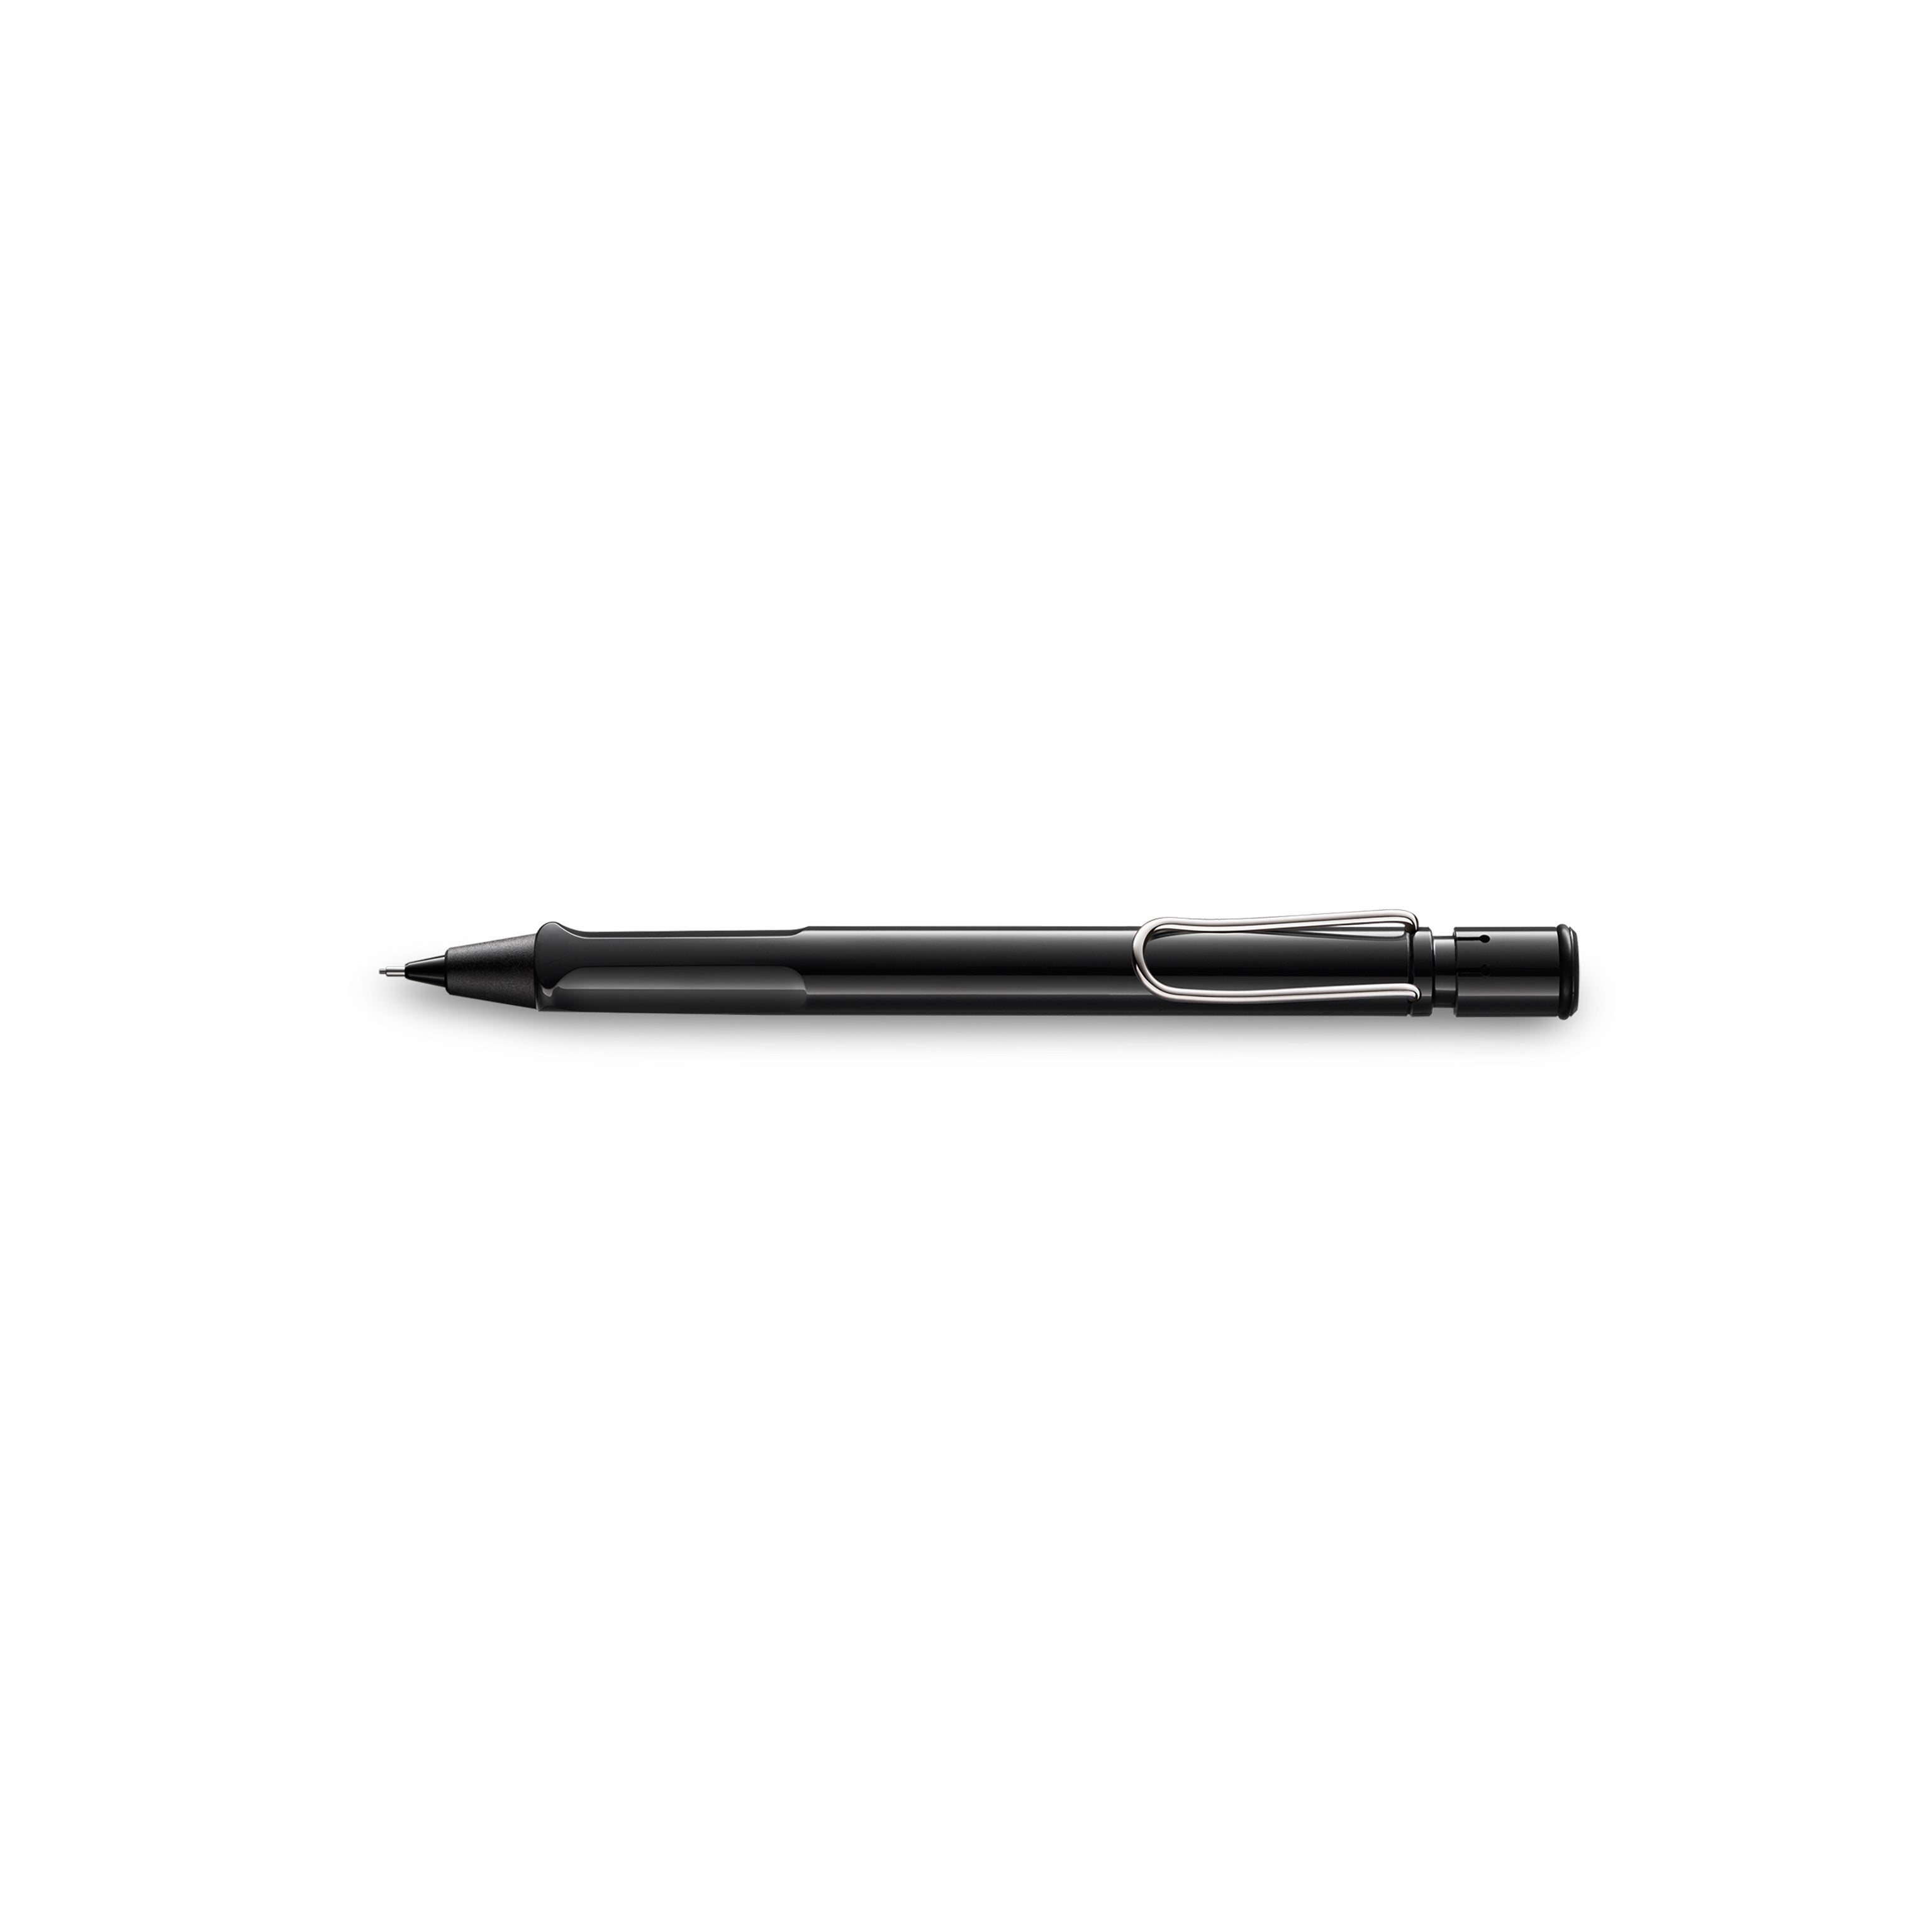 OCTÀGON DESIGN | 119 Mechanical pencil, safari black 0,5mm | Lamy | Black mechanical pencil